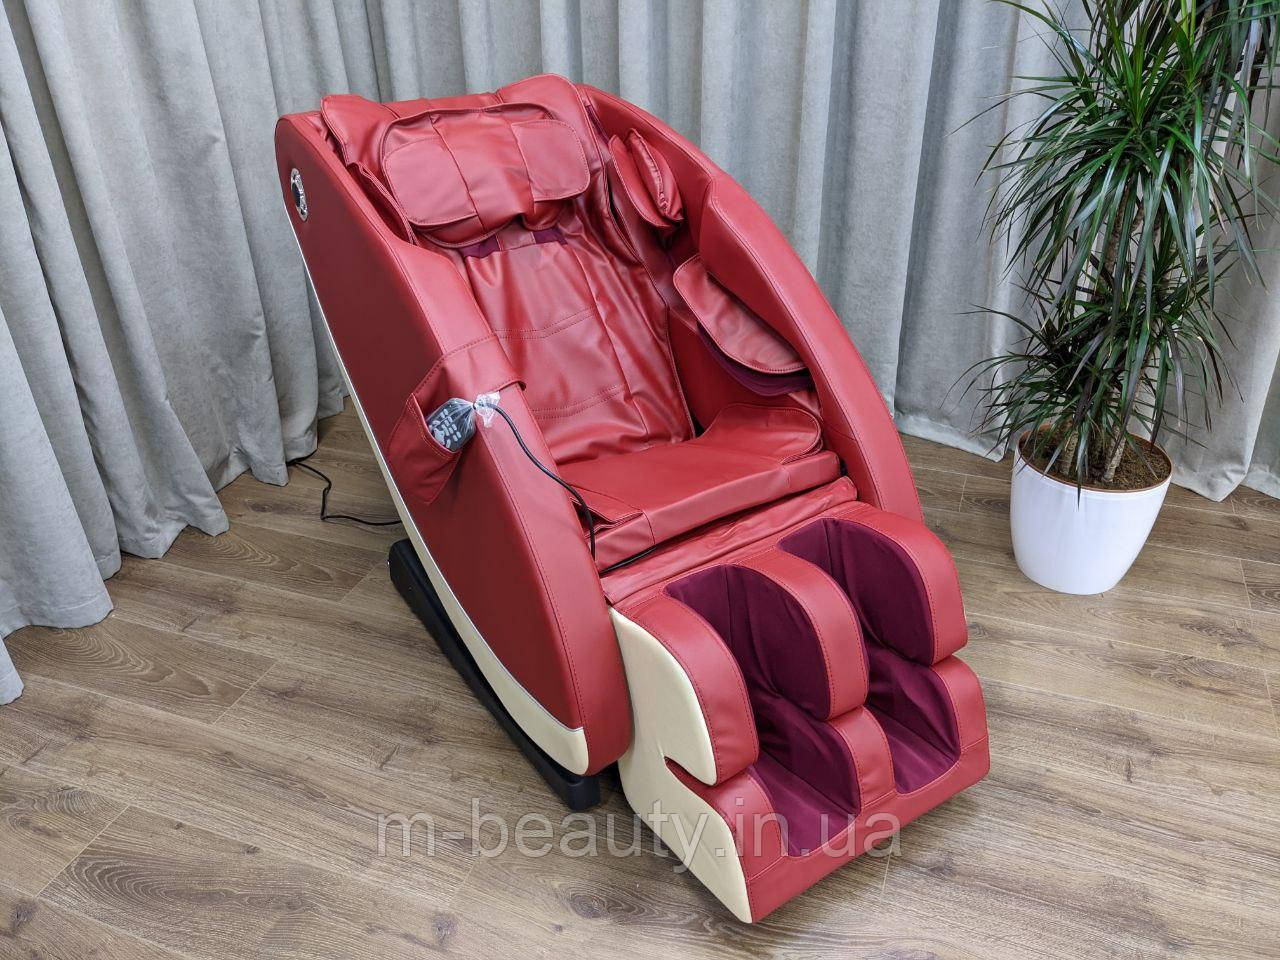 Масcажное кресло xZero Модель: VZ4 Red